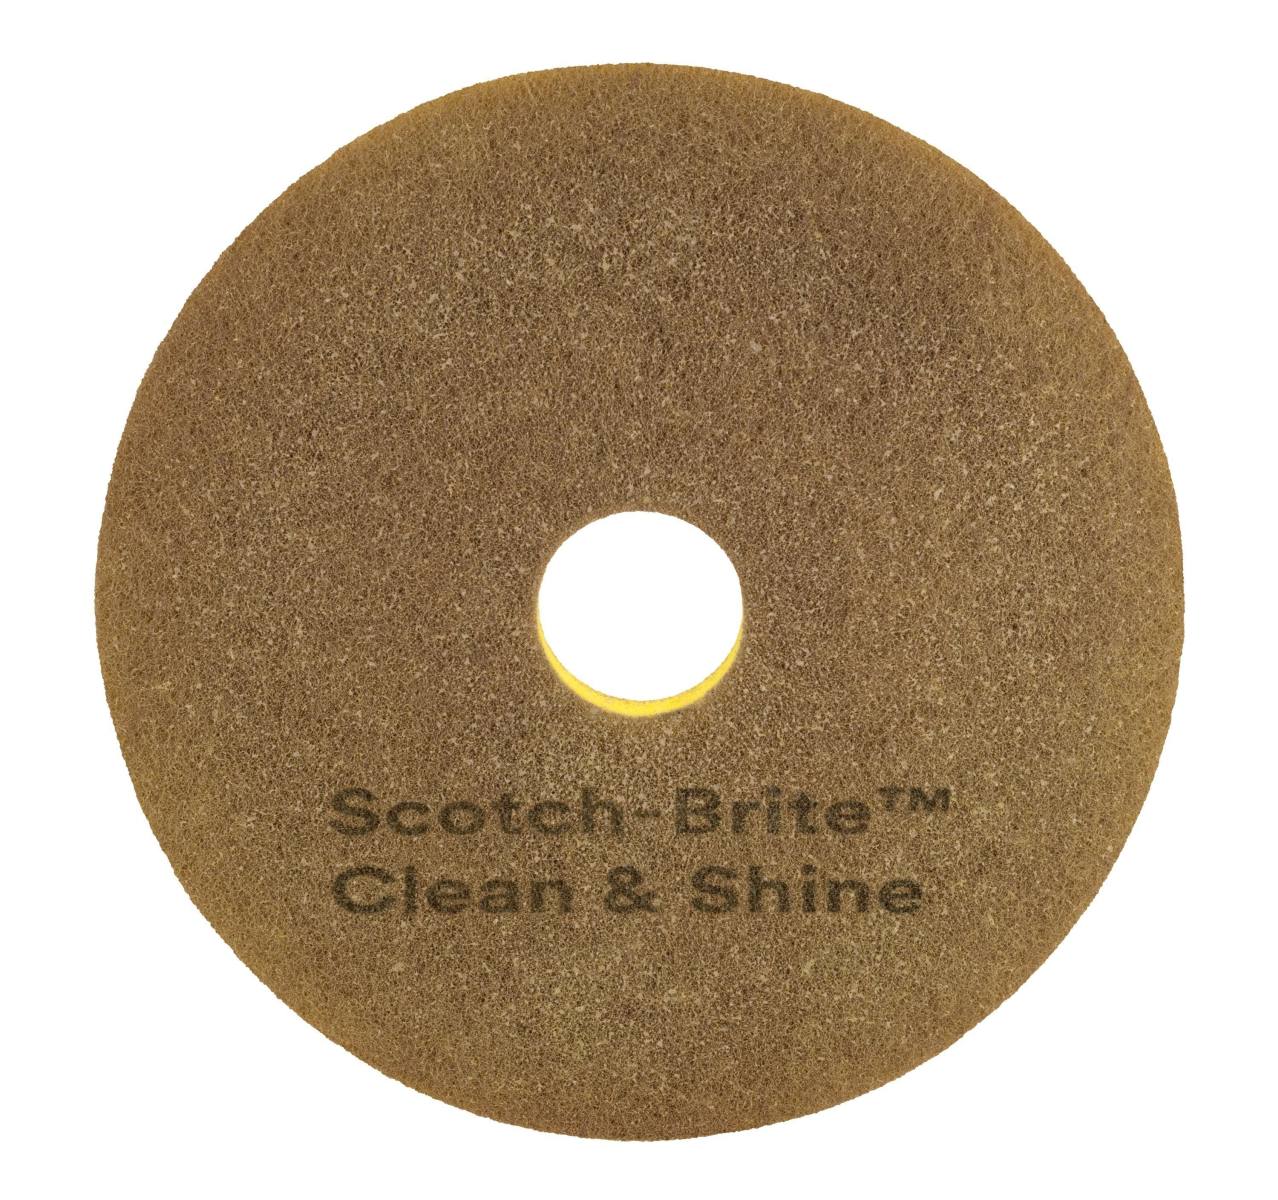 3M Scotch-Brite Clean & Shine Maschinenpad, 460 mm, 5 Stück / Karton